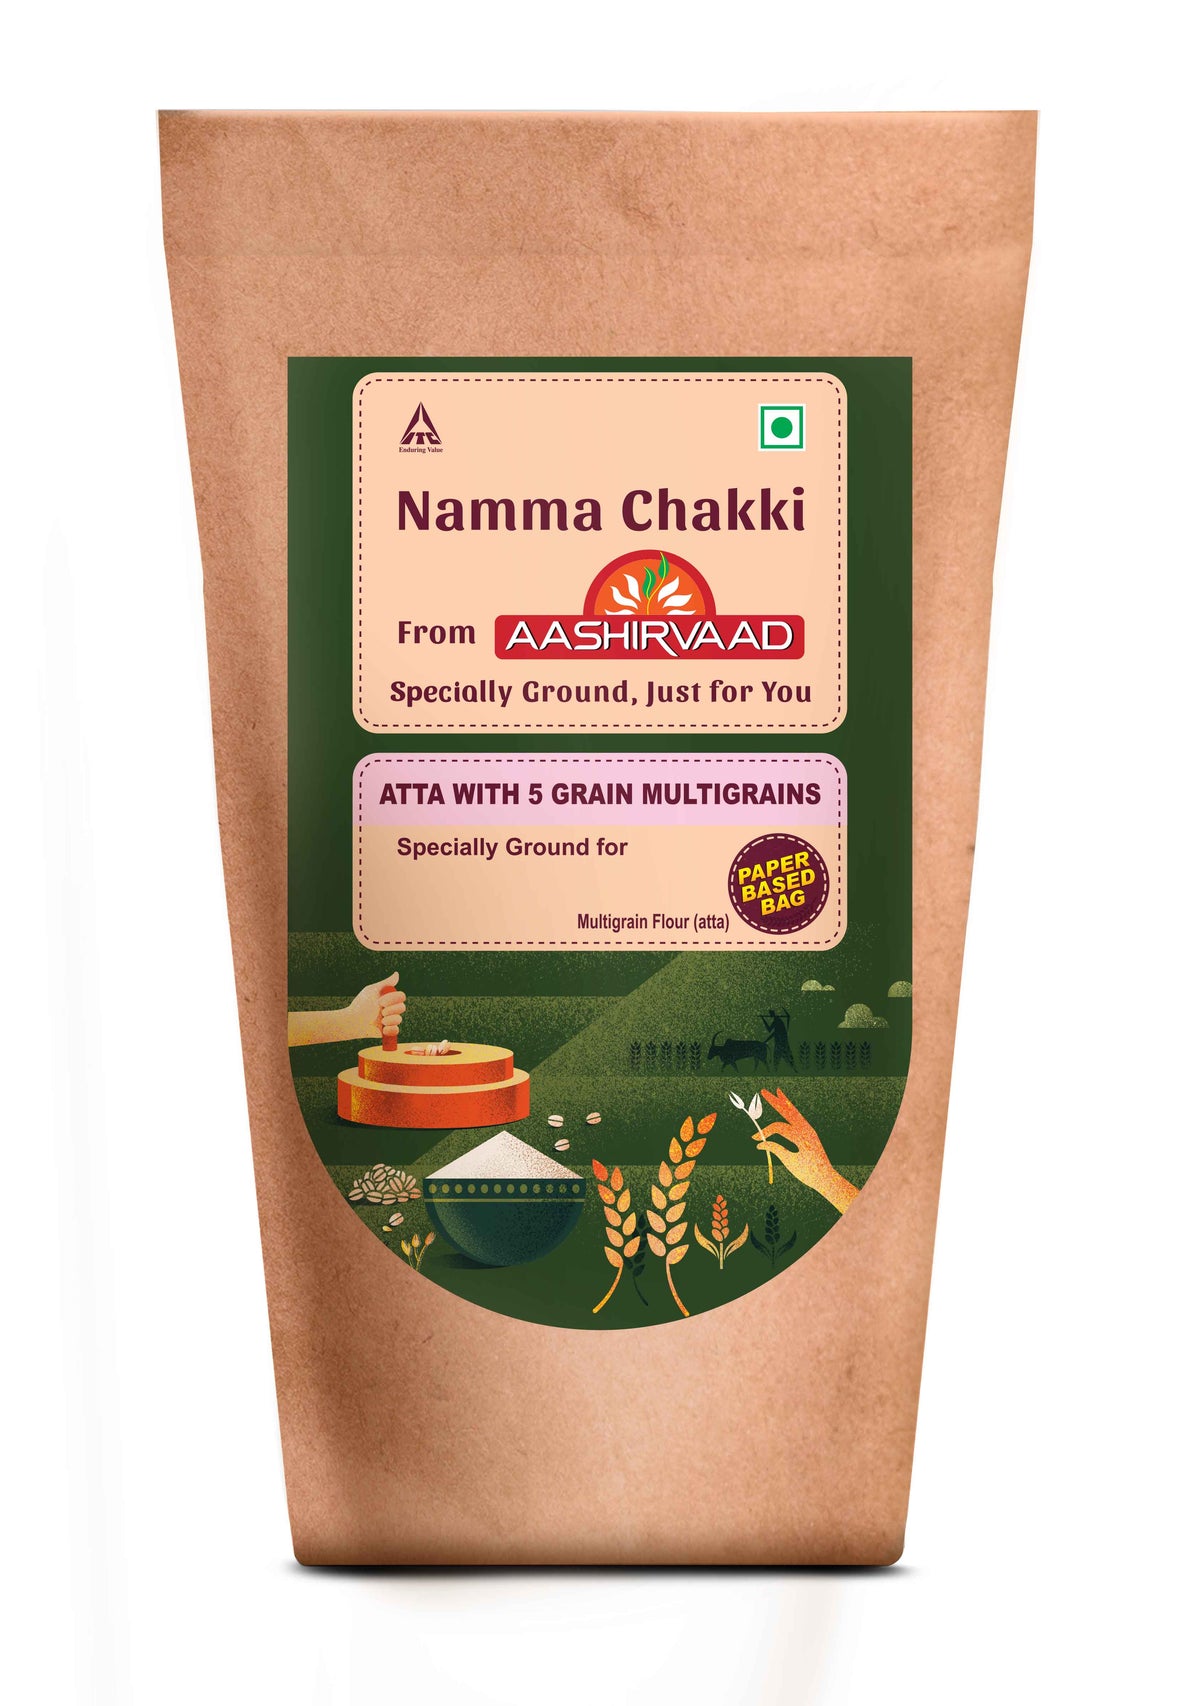 Namma Chakki 6 Grain Multigrain Atta